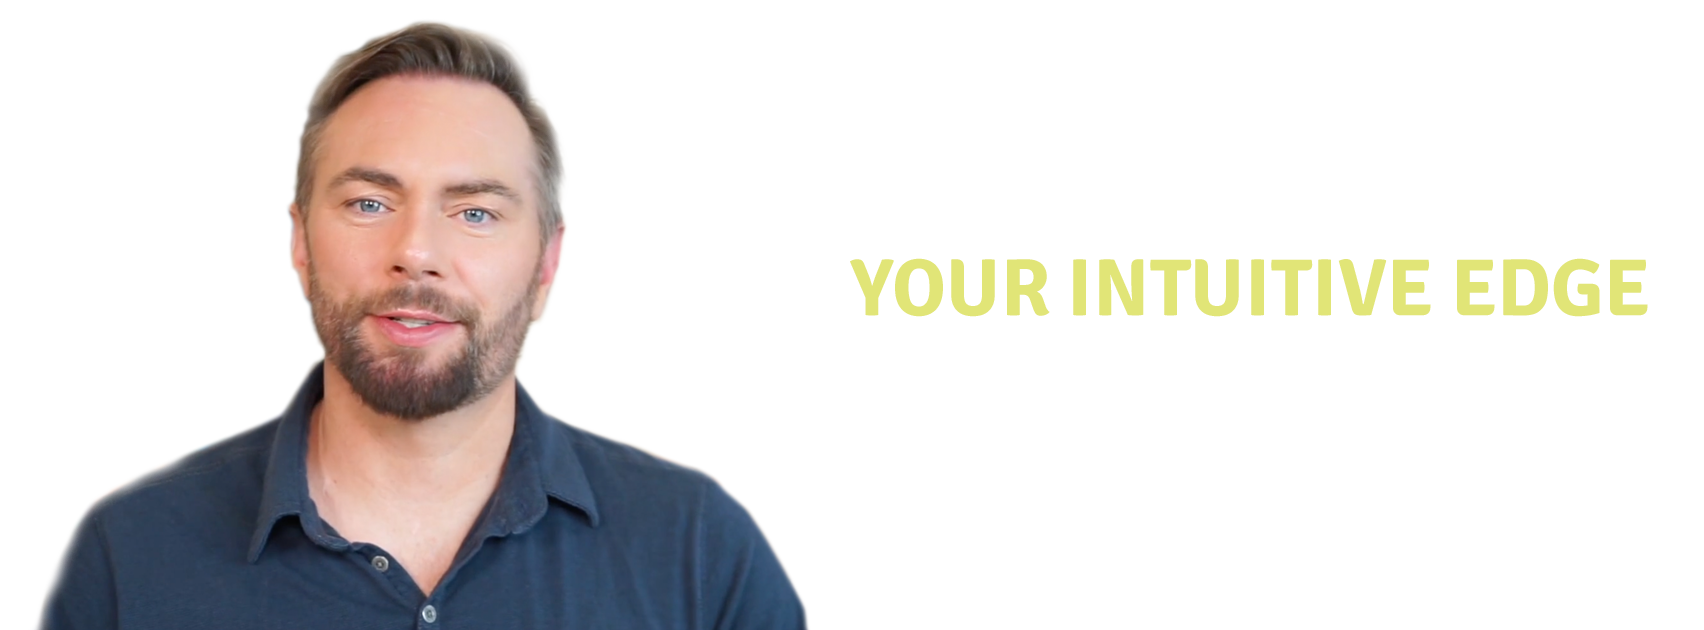 Your Intuitive Edge Premium Membership